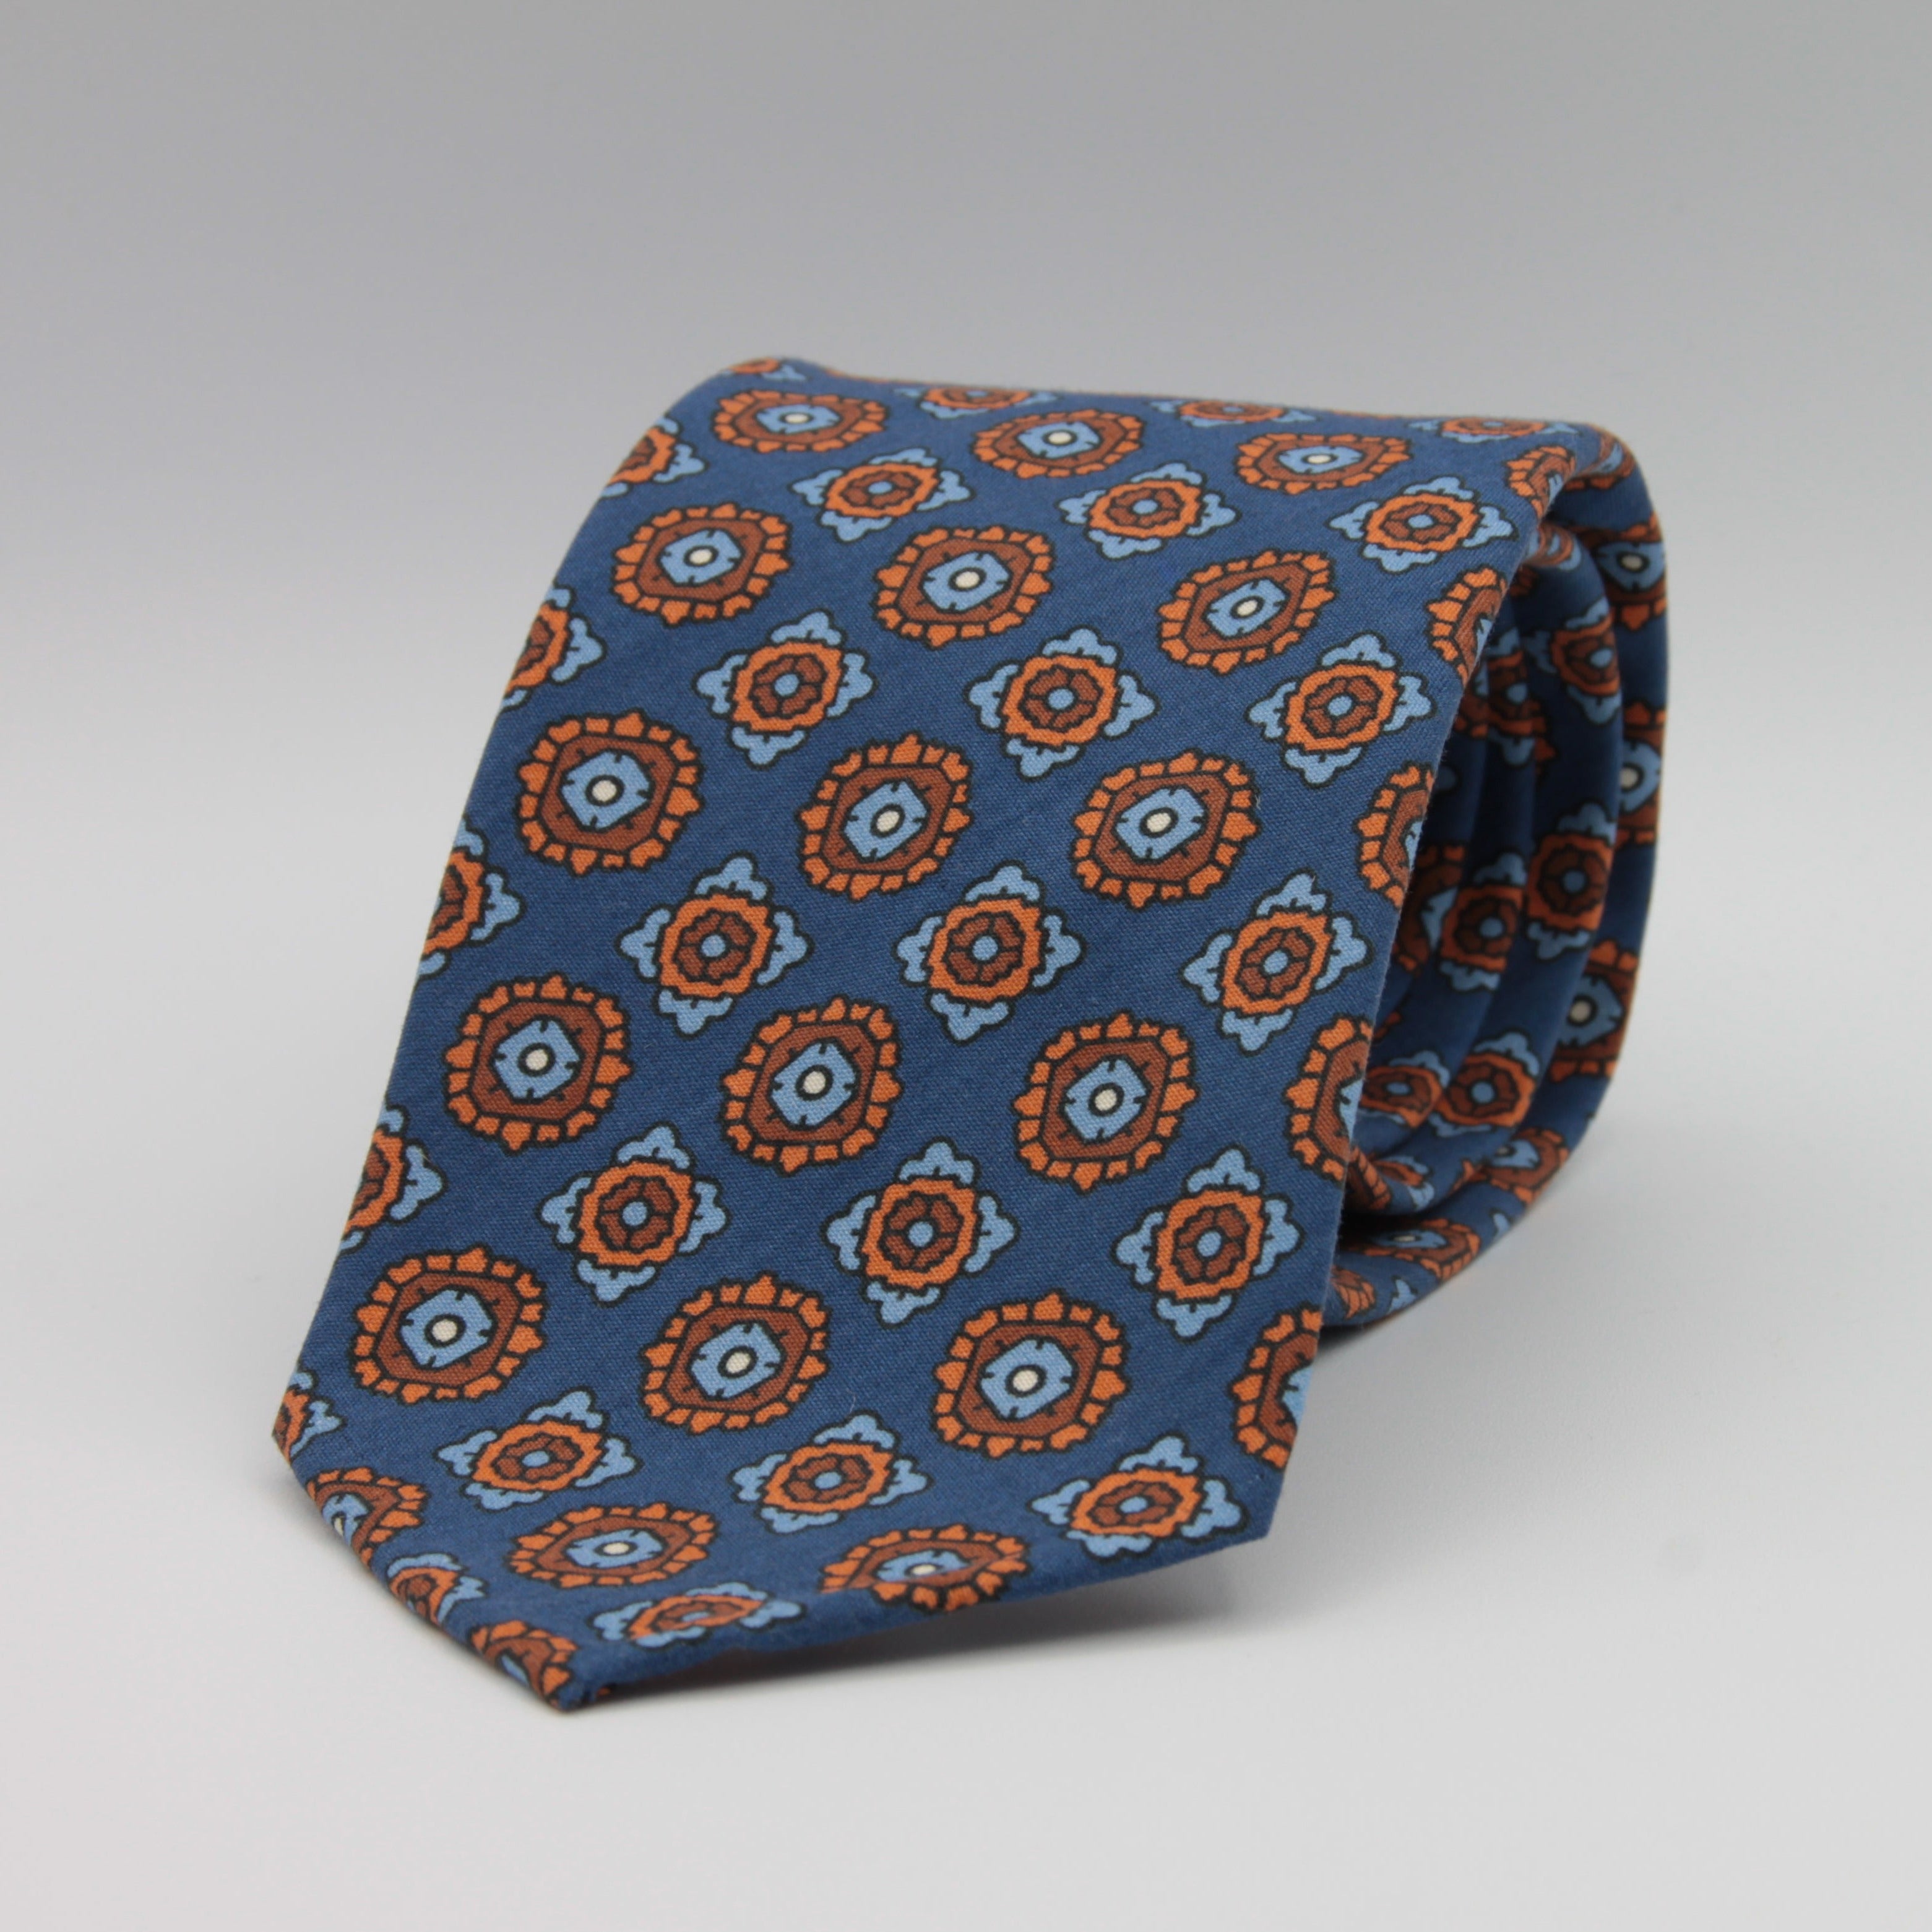 Cruciani & Bella 100% Printed Madder Silk  Italian fabric Unlined tie Blue, Orange and Brown Motifs Tie Handmade in Italy 8 cm x 150 cm #7617